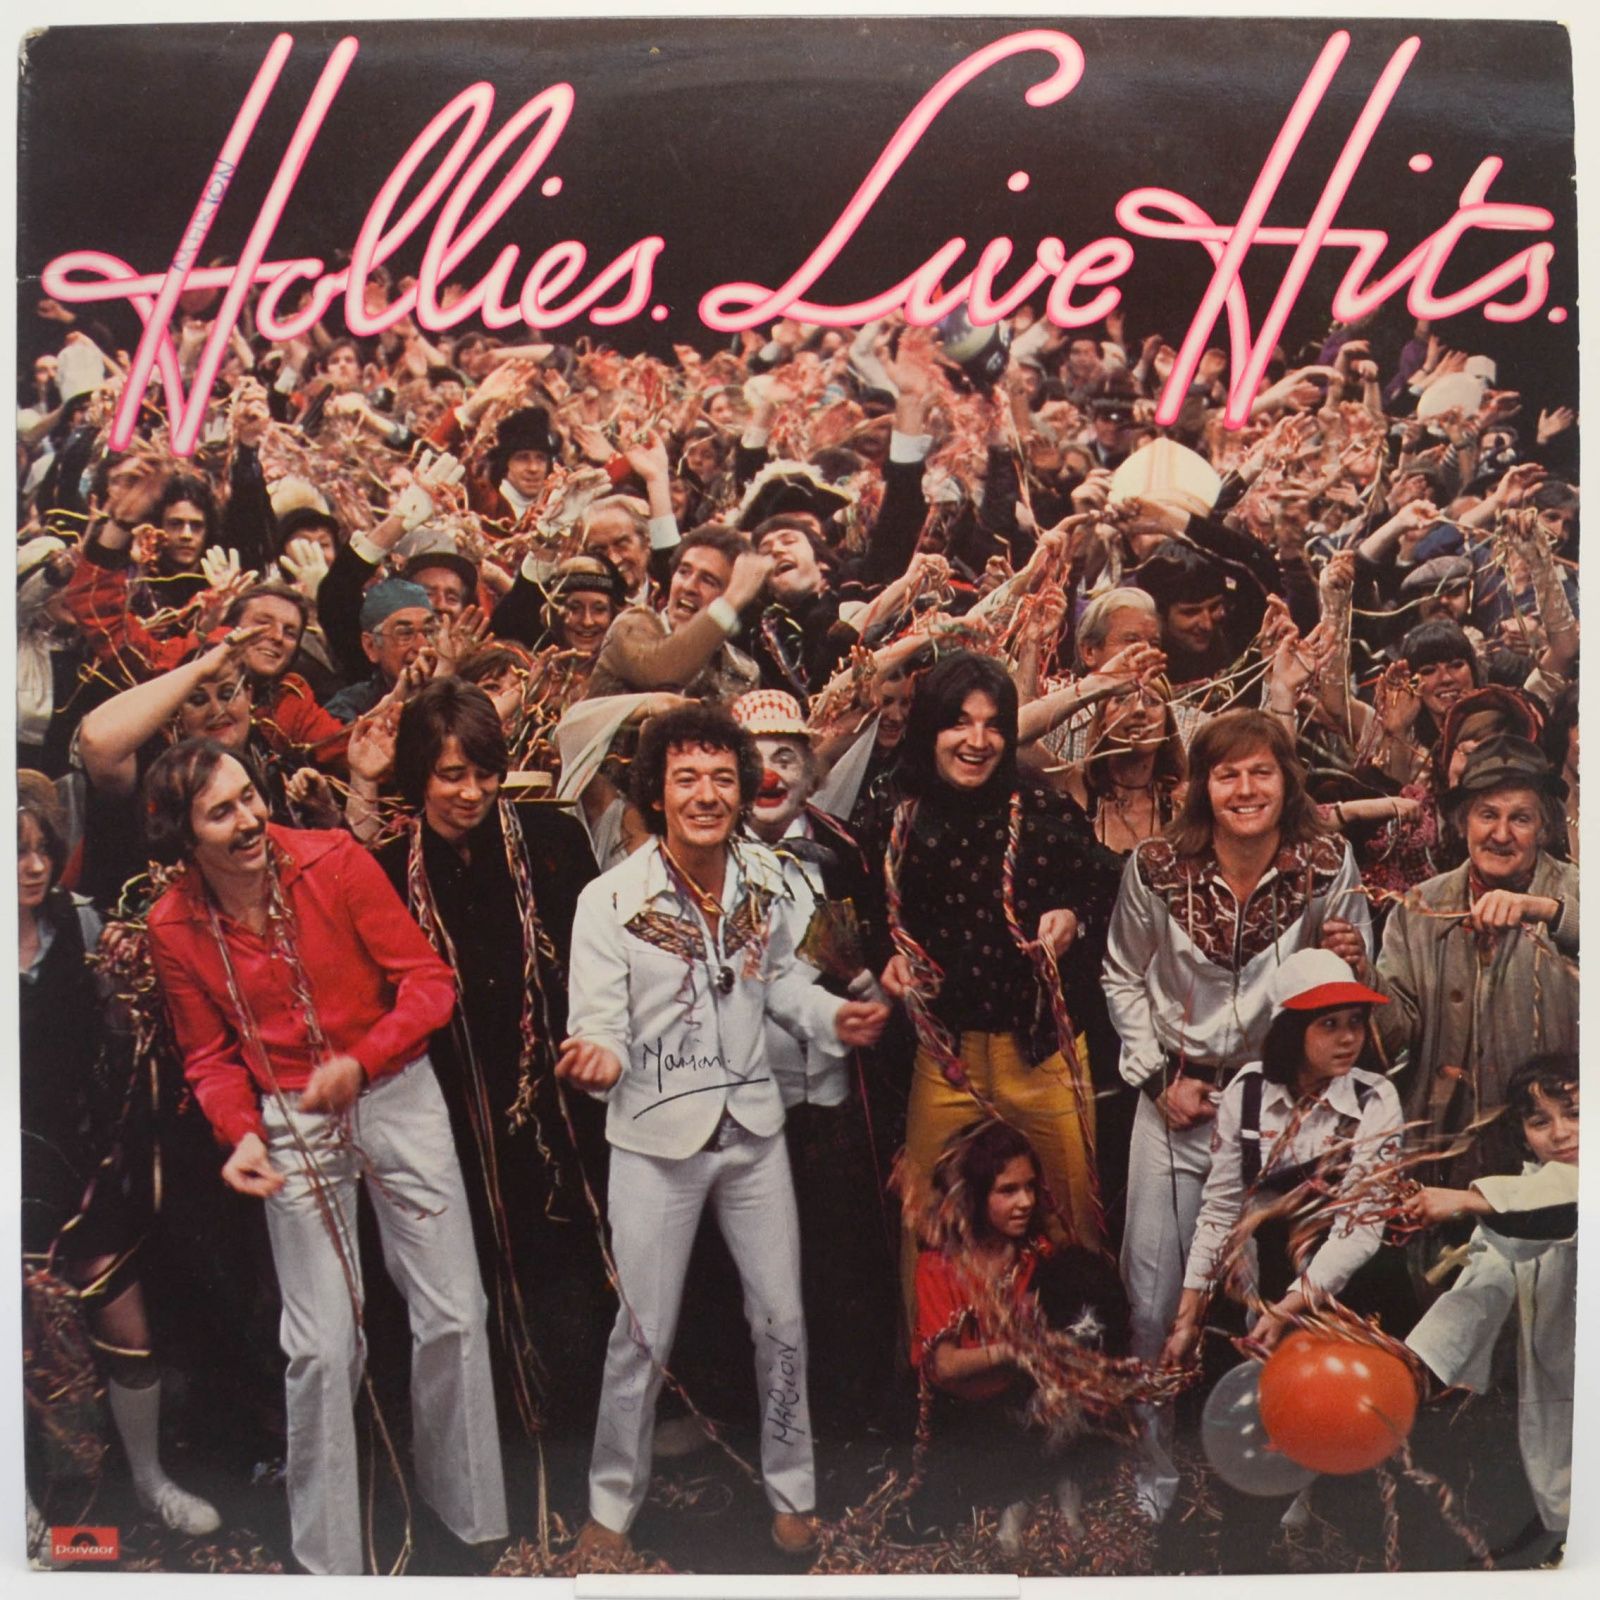 Hollies Live Hits (UK), 1976